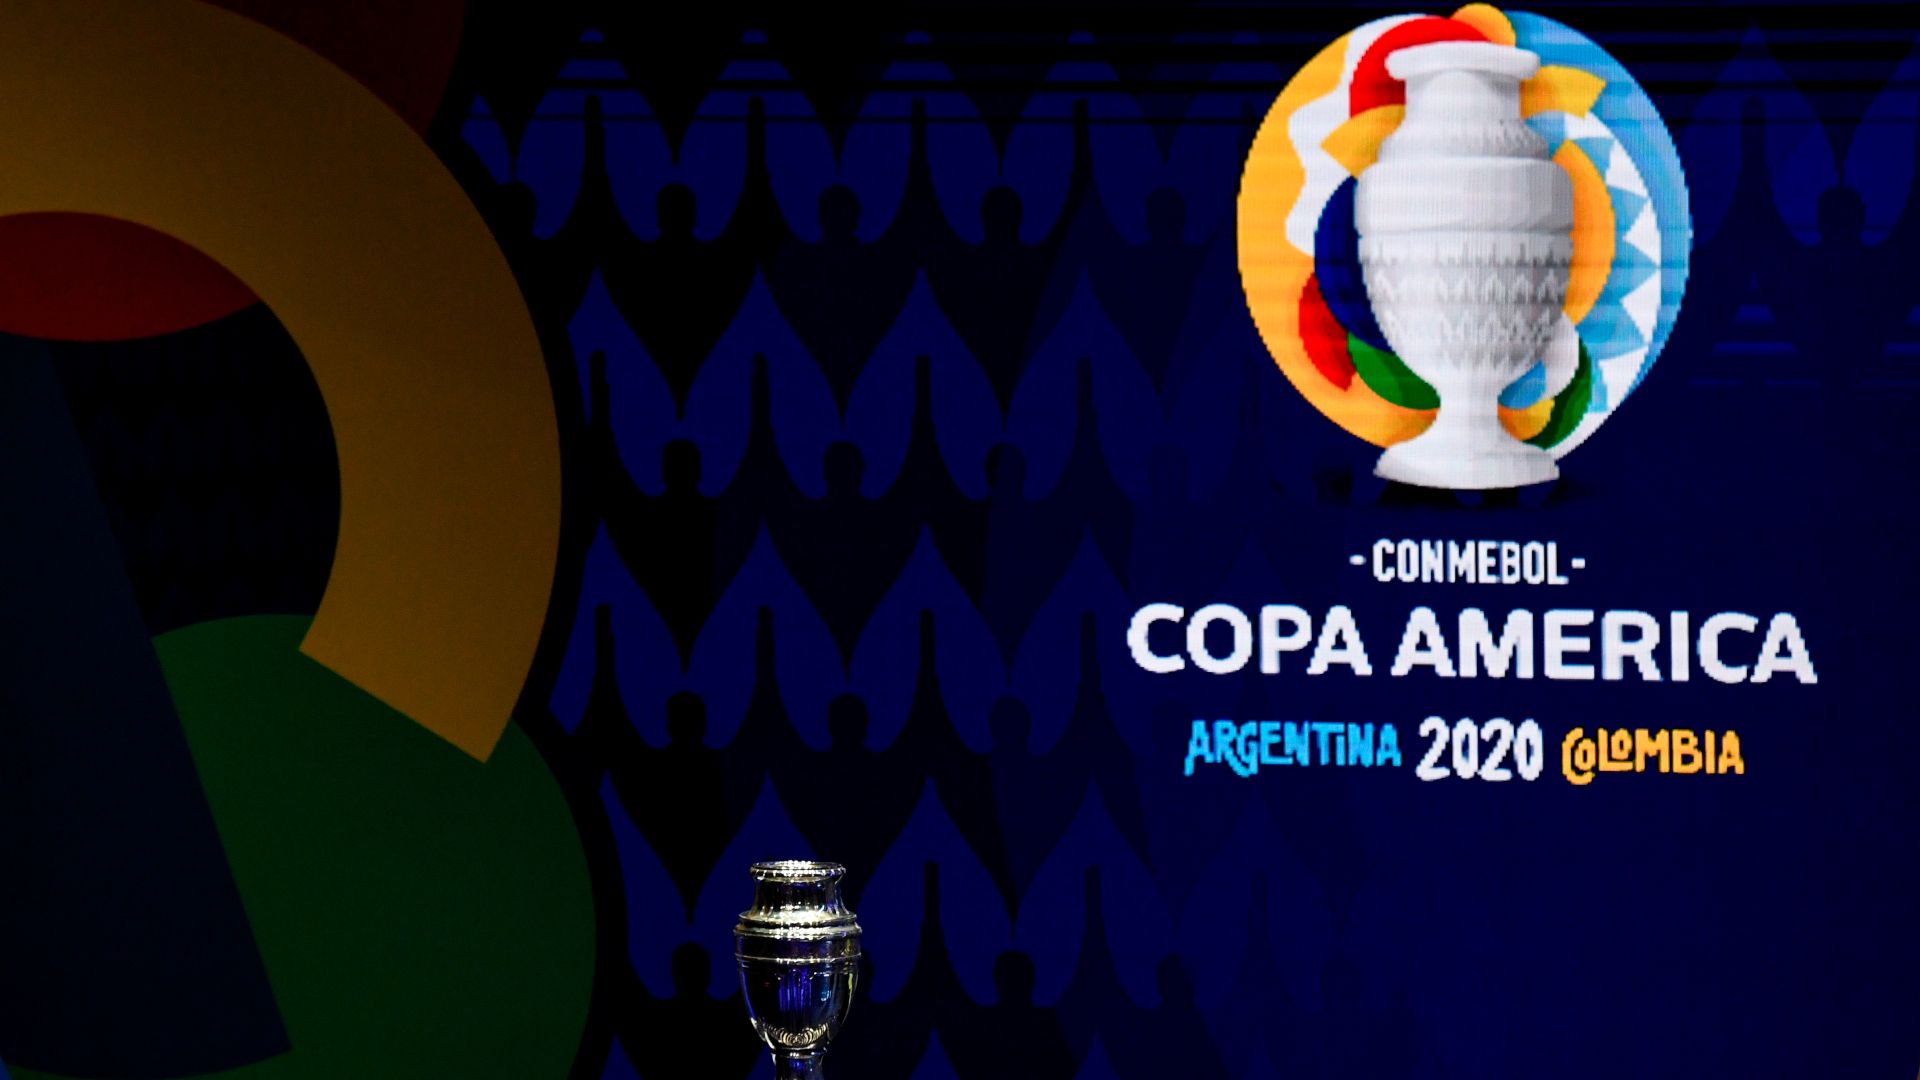 Copa America 2021 Logo Wallpapers Wallpaper Cave